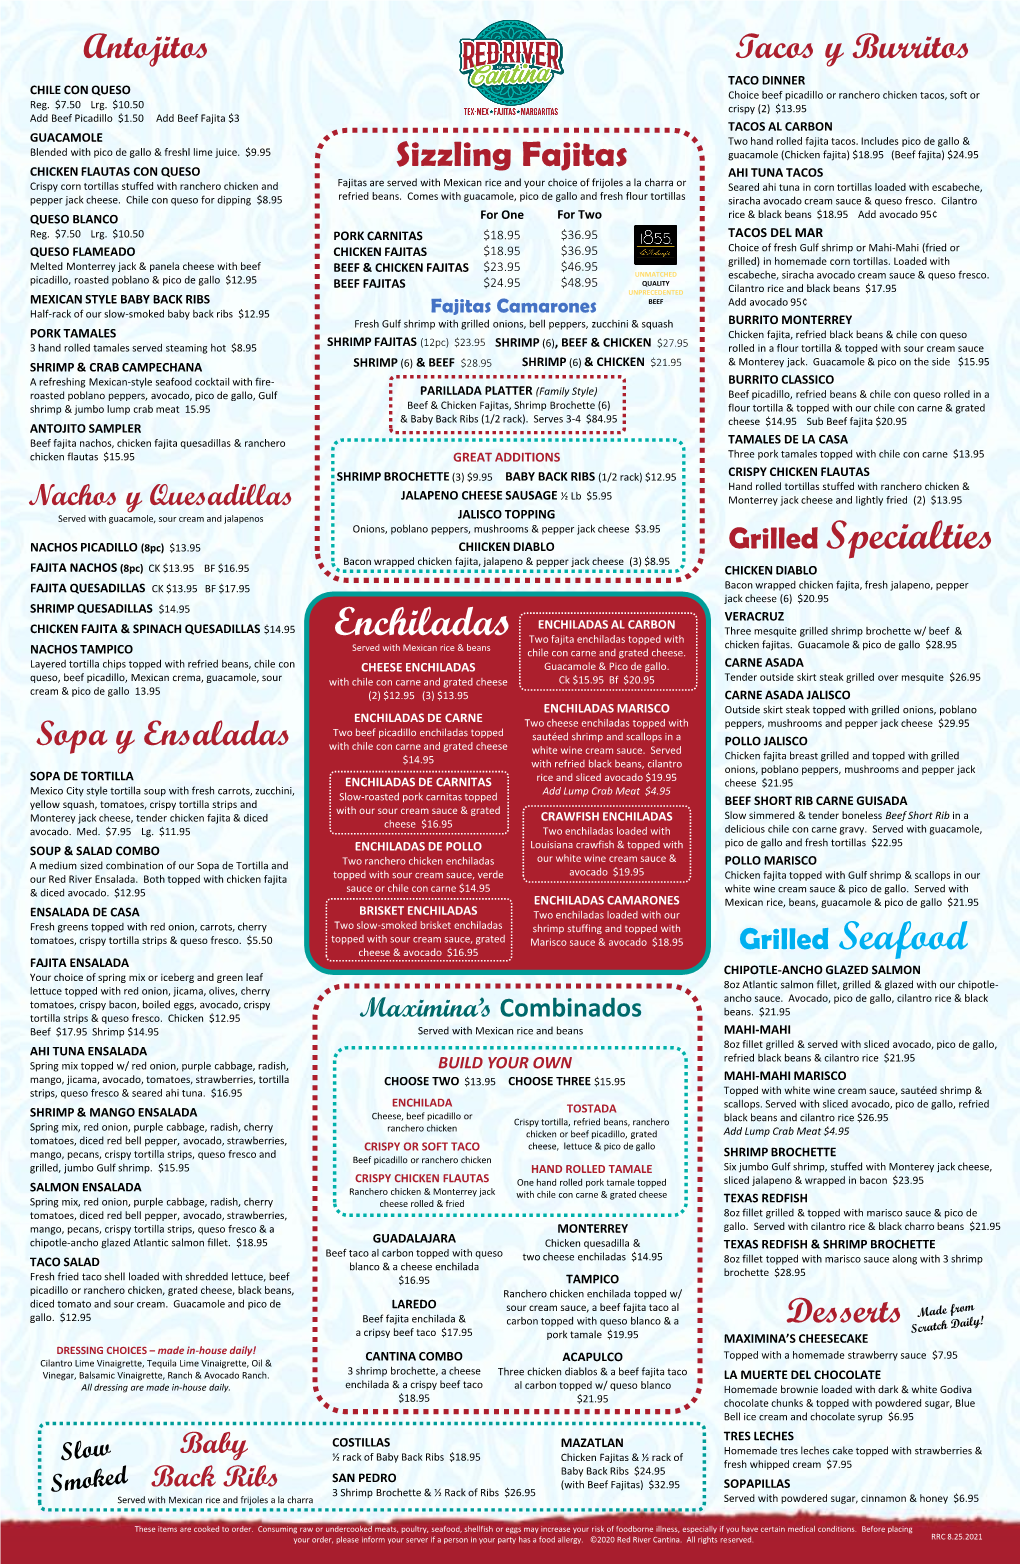 Enchiladas Grilled Specialties